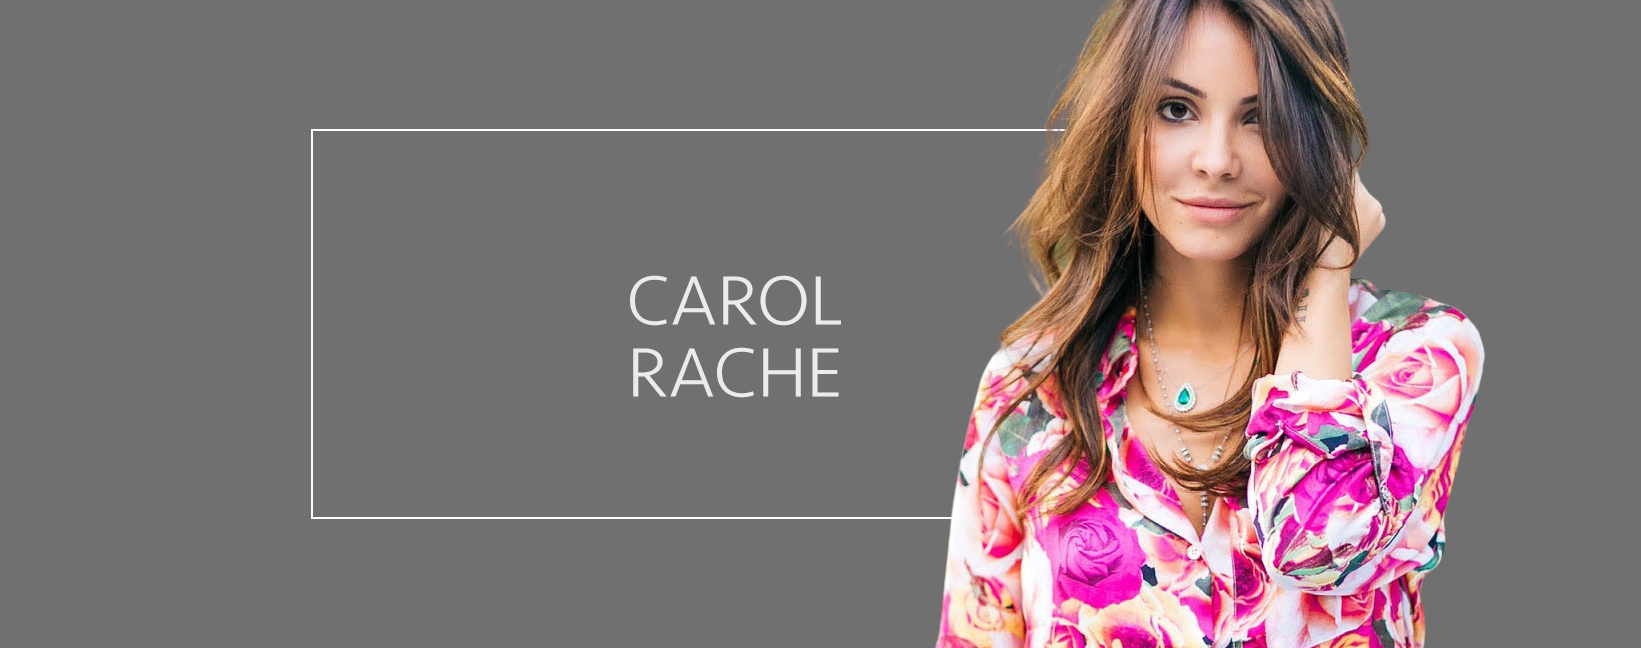 Carol Rache